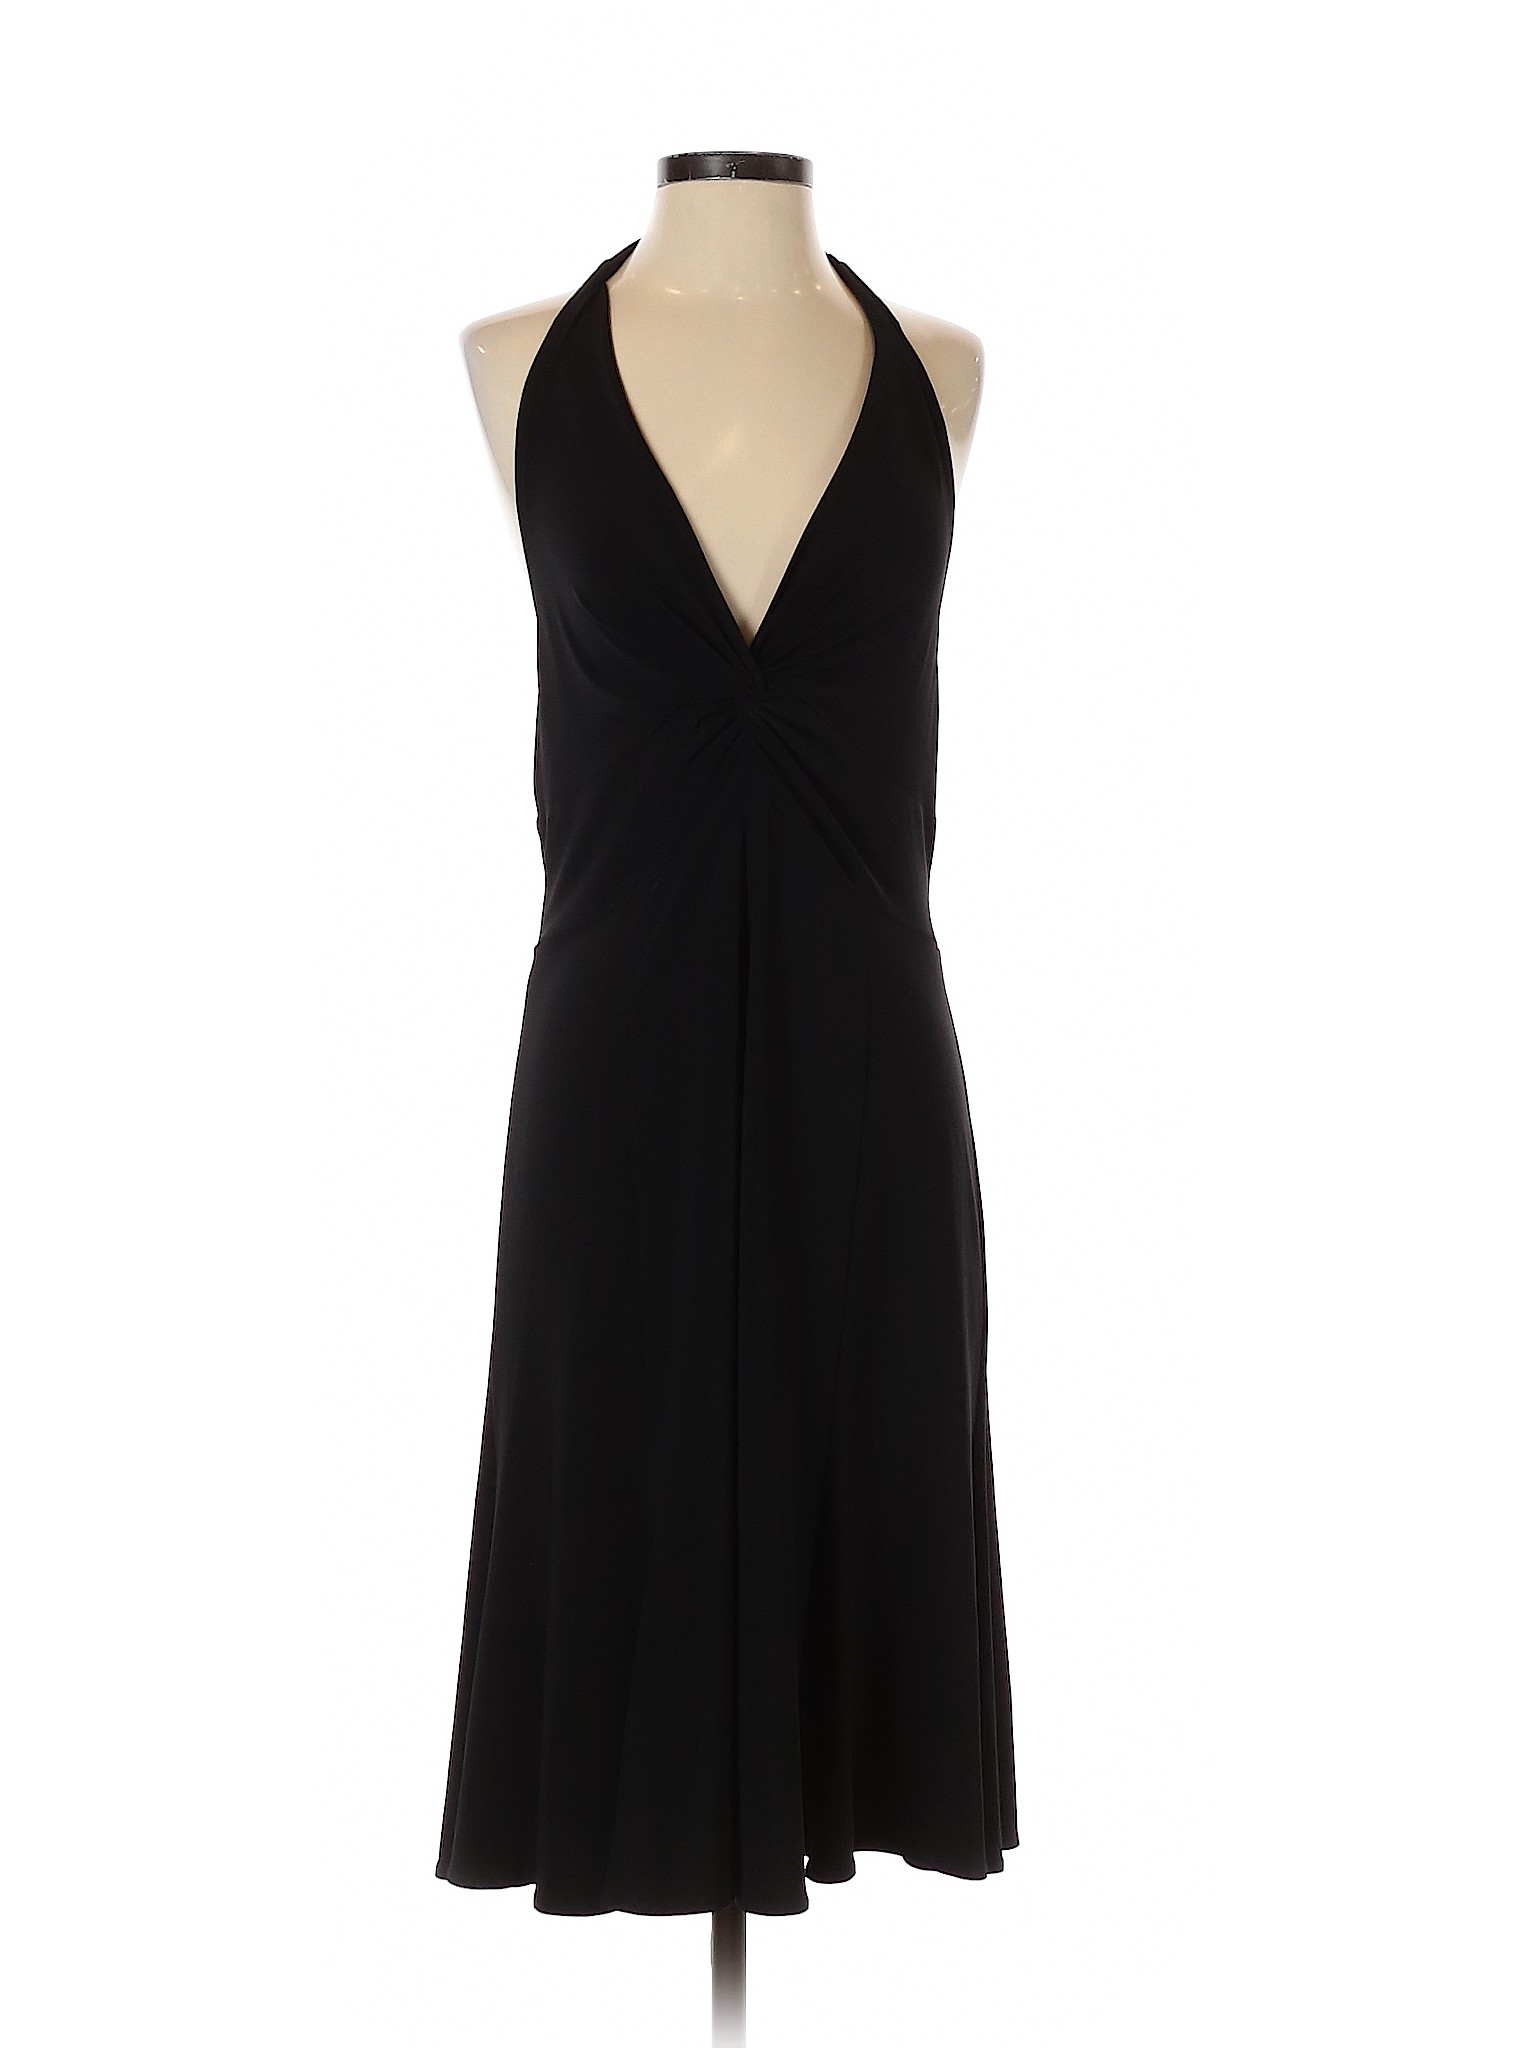 NWT Evan Picone Women Black Cocktail Dress 8 Petites | eBay